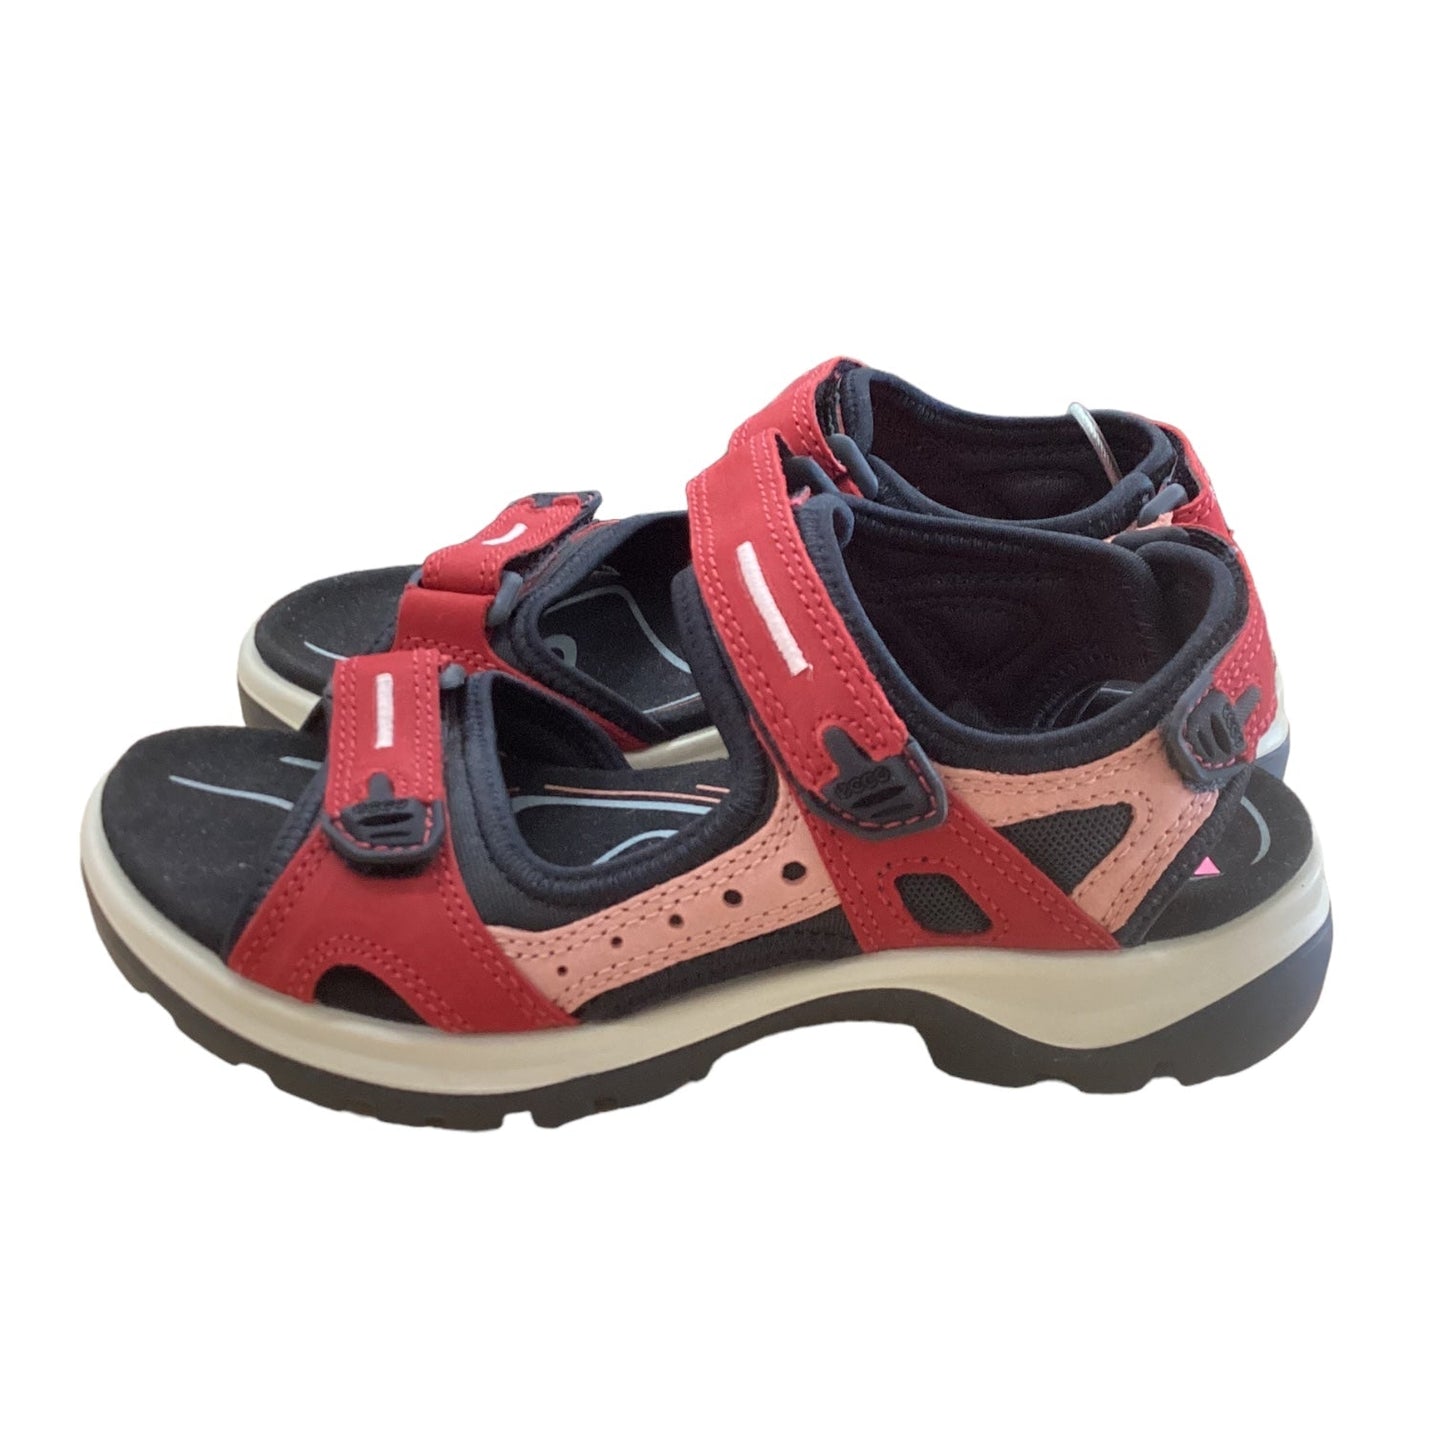 Black & Red Sandals Flats Ecco, Size 5.5